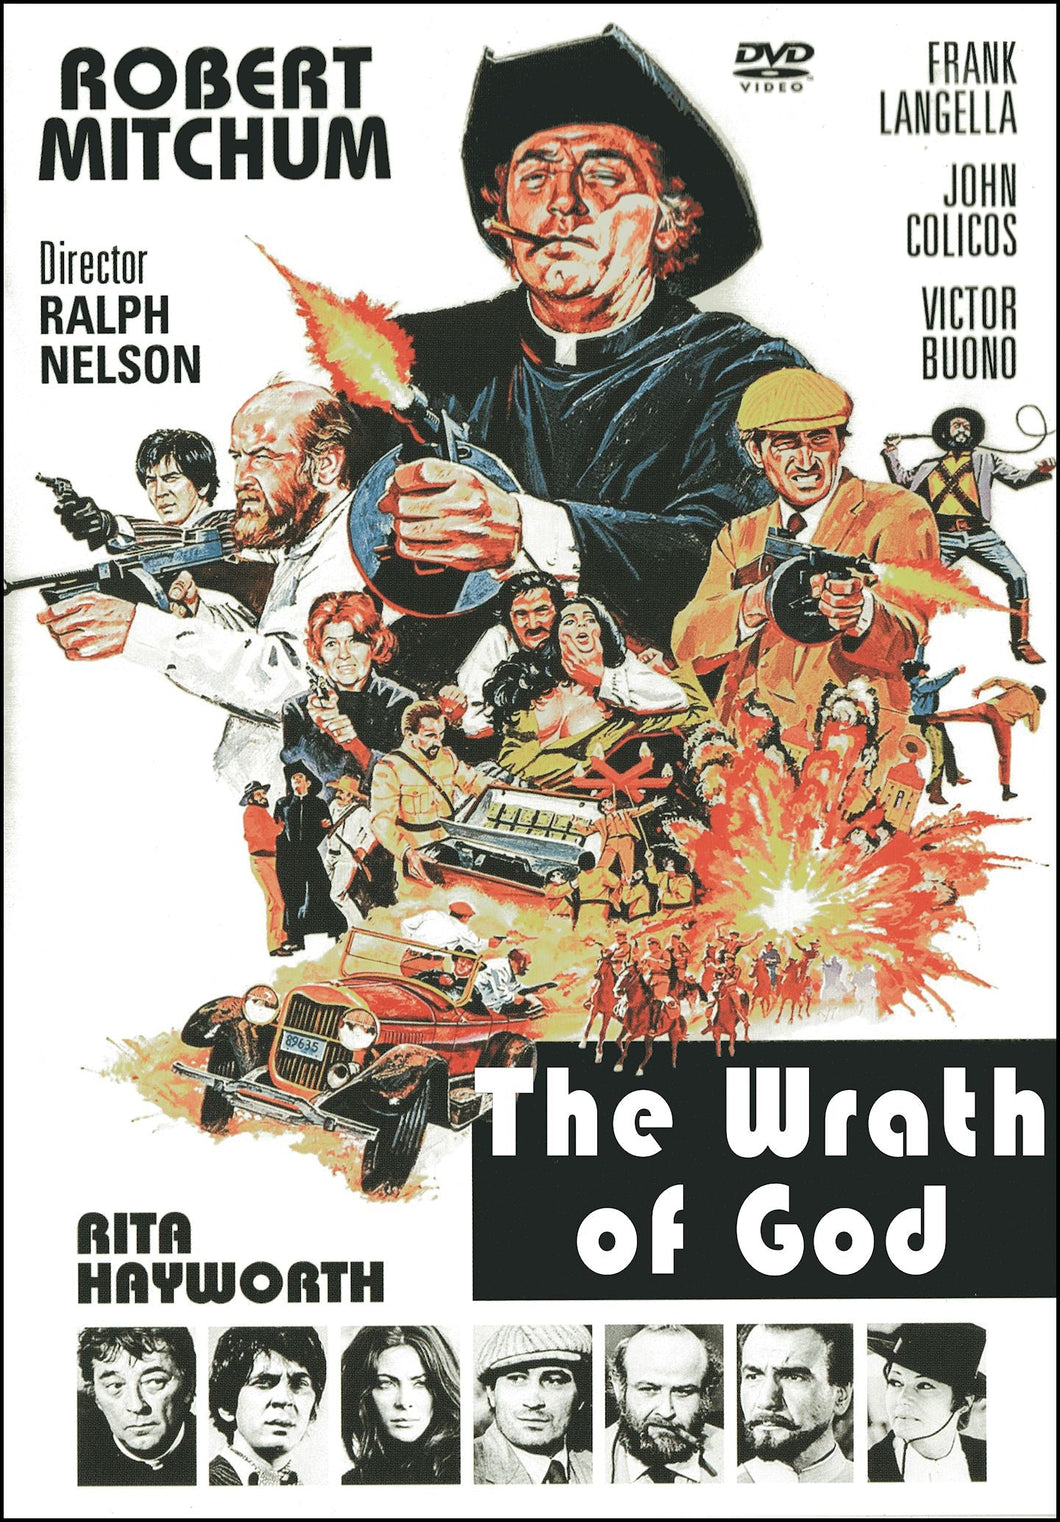 The Wrath of God (1972) DVD Robert Mitchum & Frank Langella